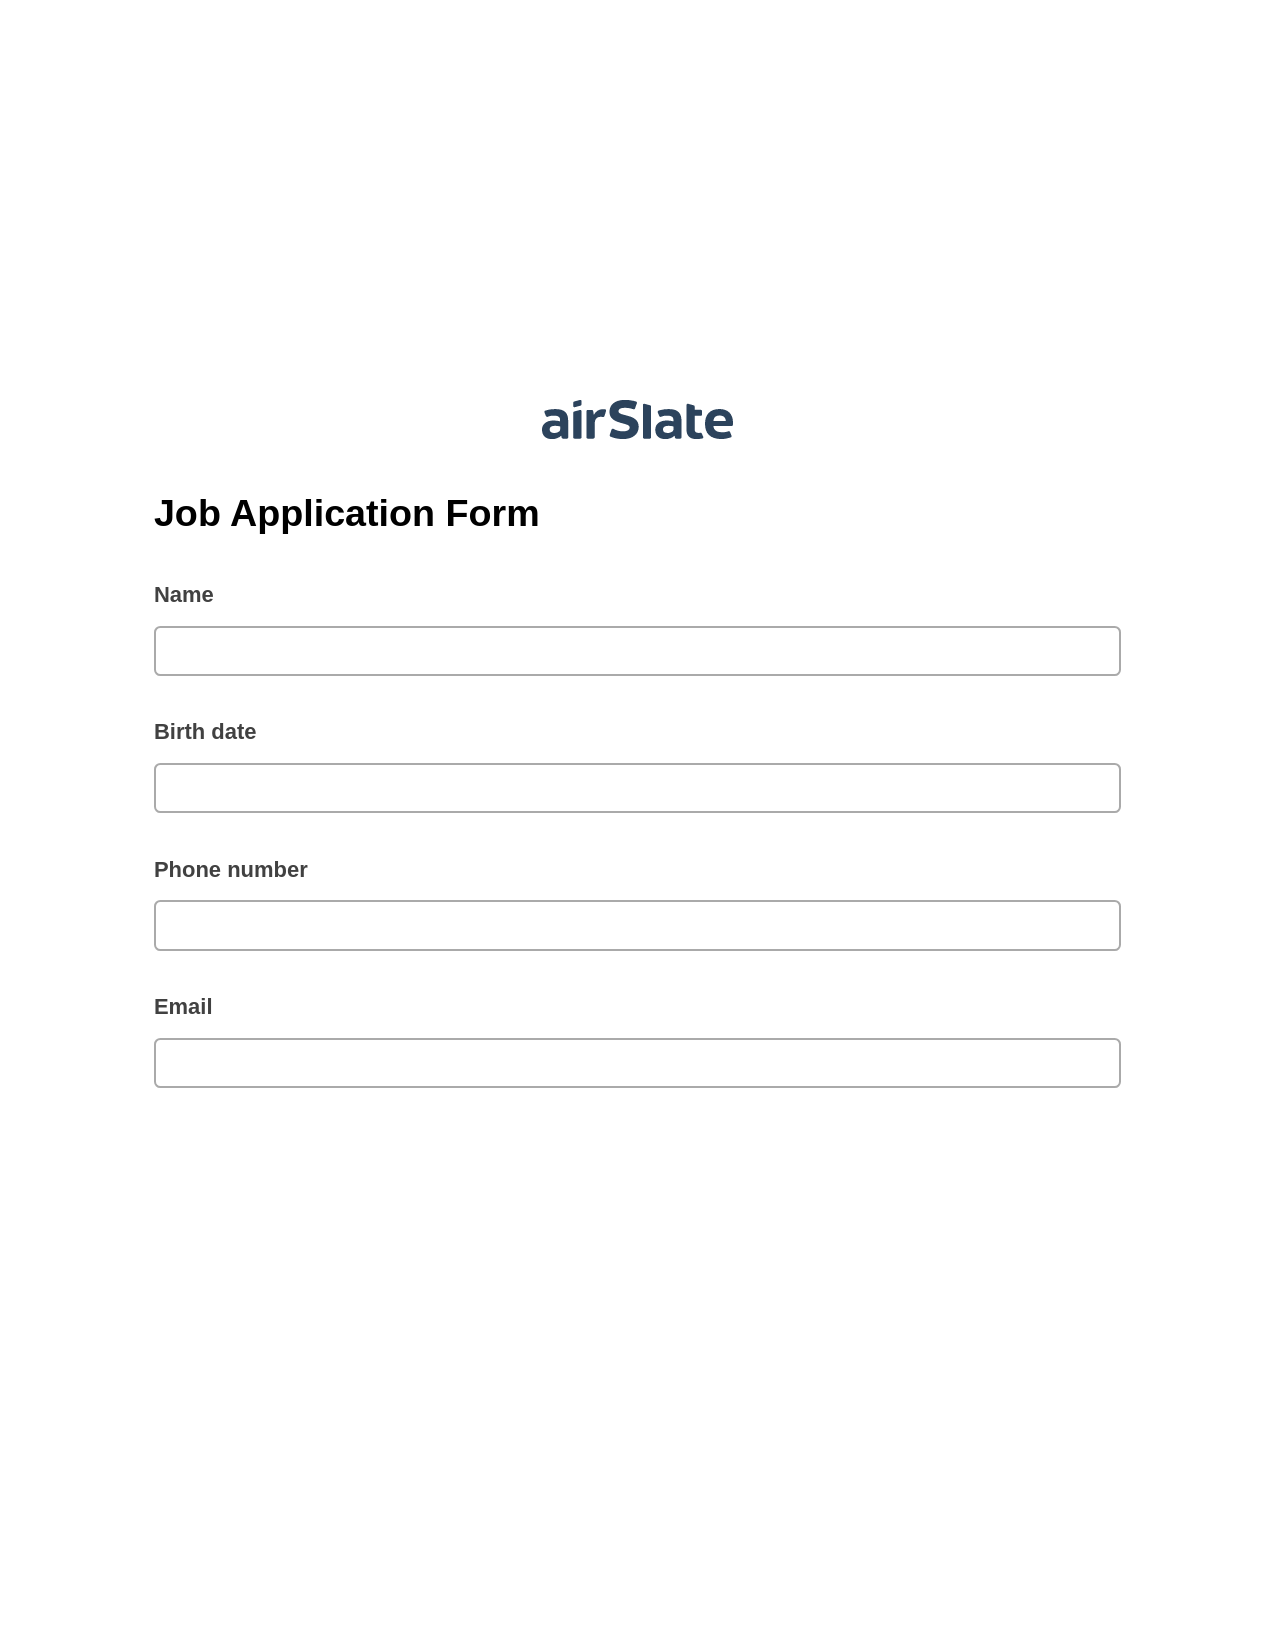 Multirole Job Application Form Pre-fill Dropdowns from Smartsheet Bot, Jira Bot, Slack Notification Postfinish Bot